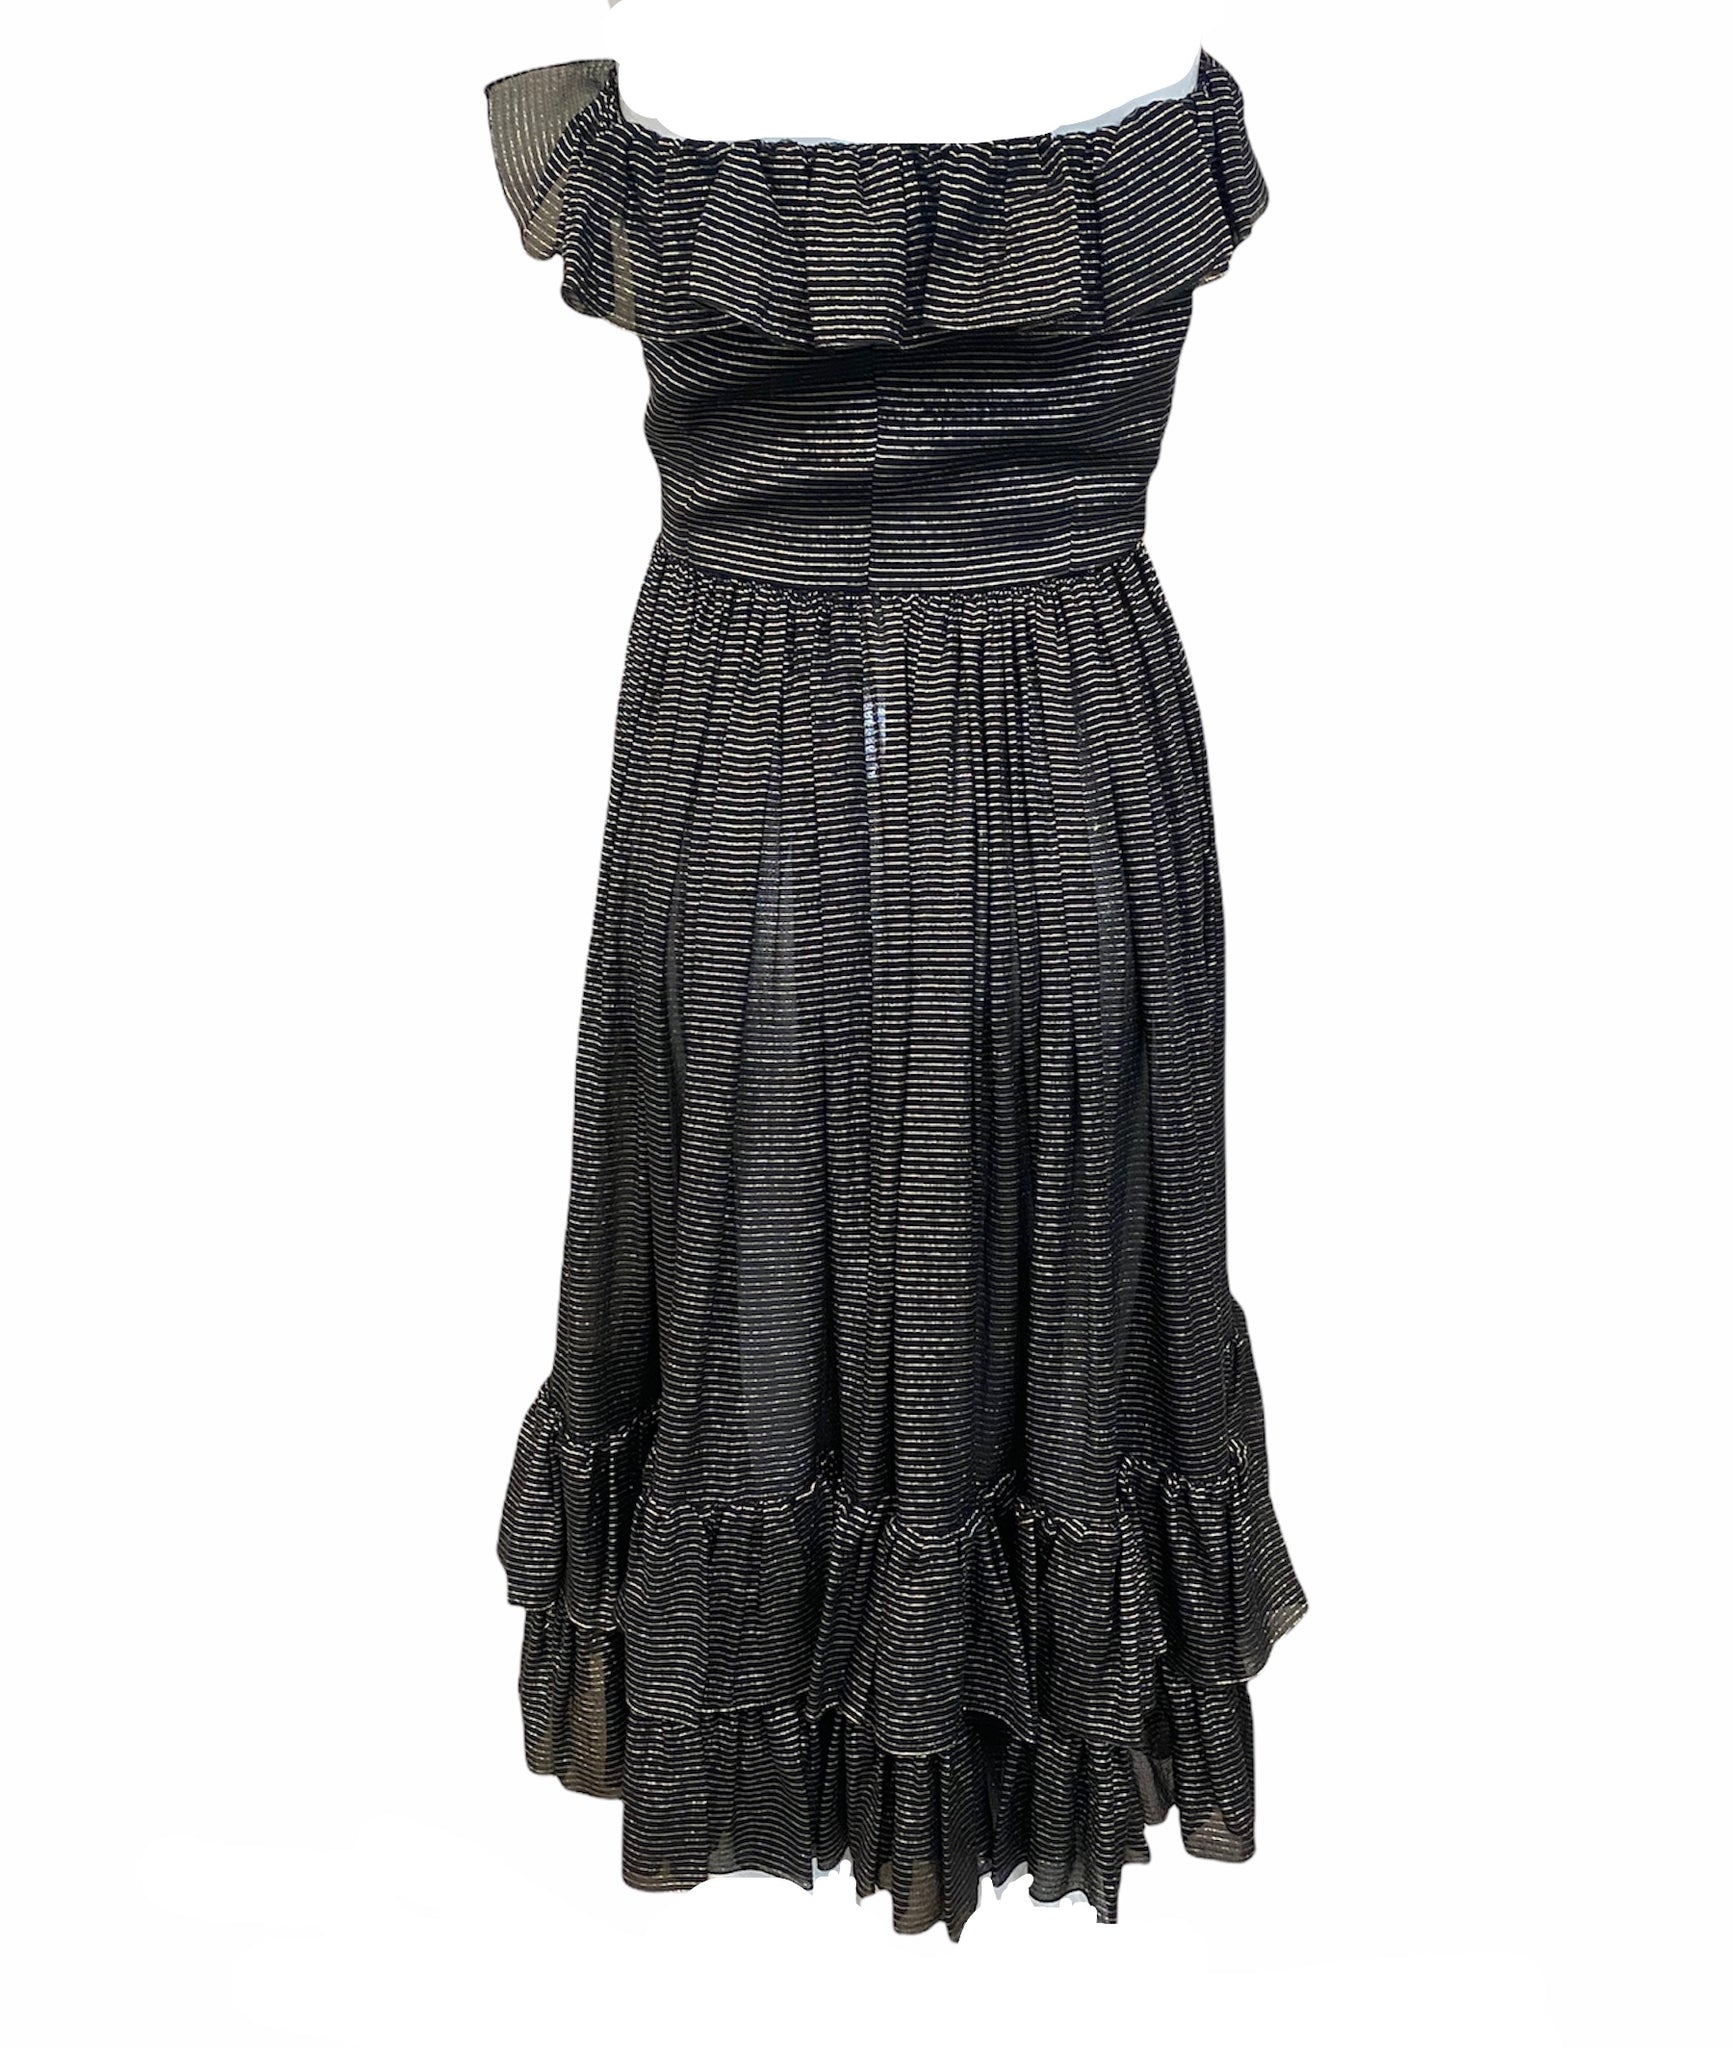 Ungaro 70s Strapless Metallic Stripe Dress BACK 3 of 5